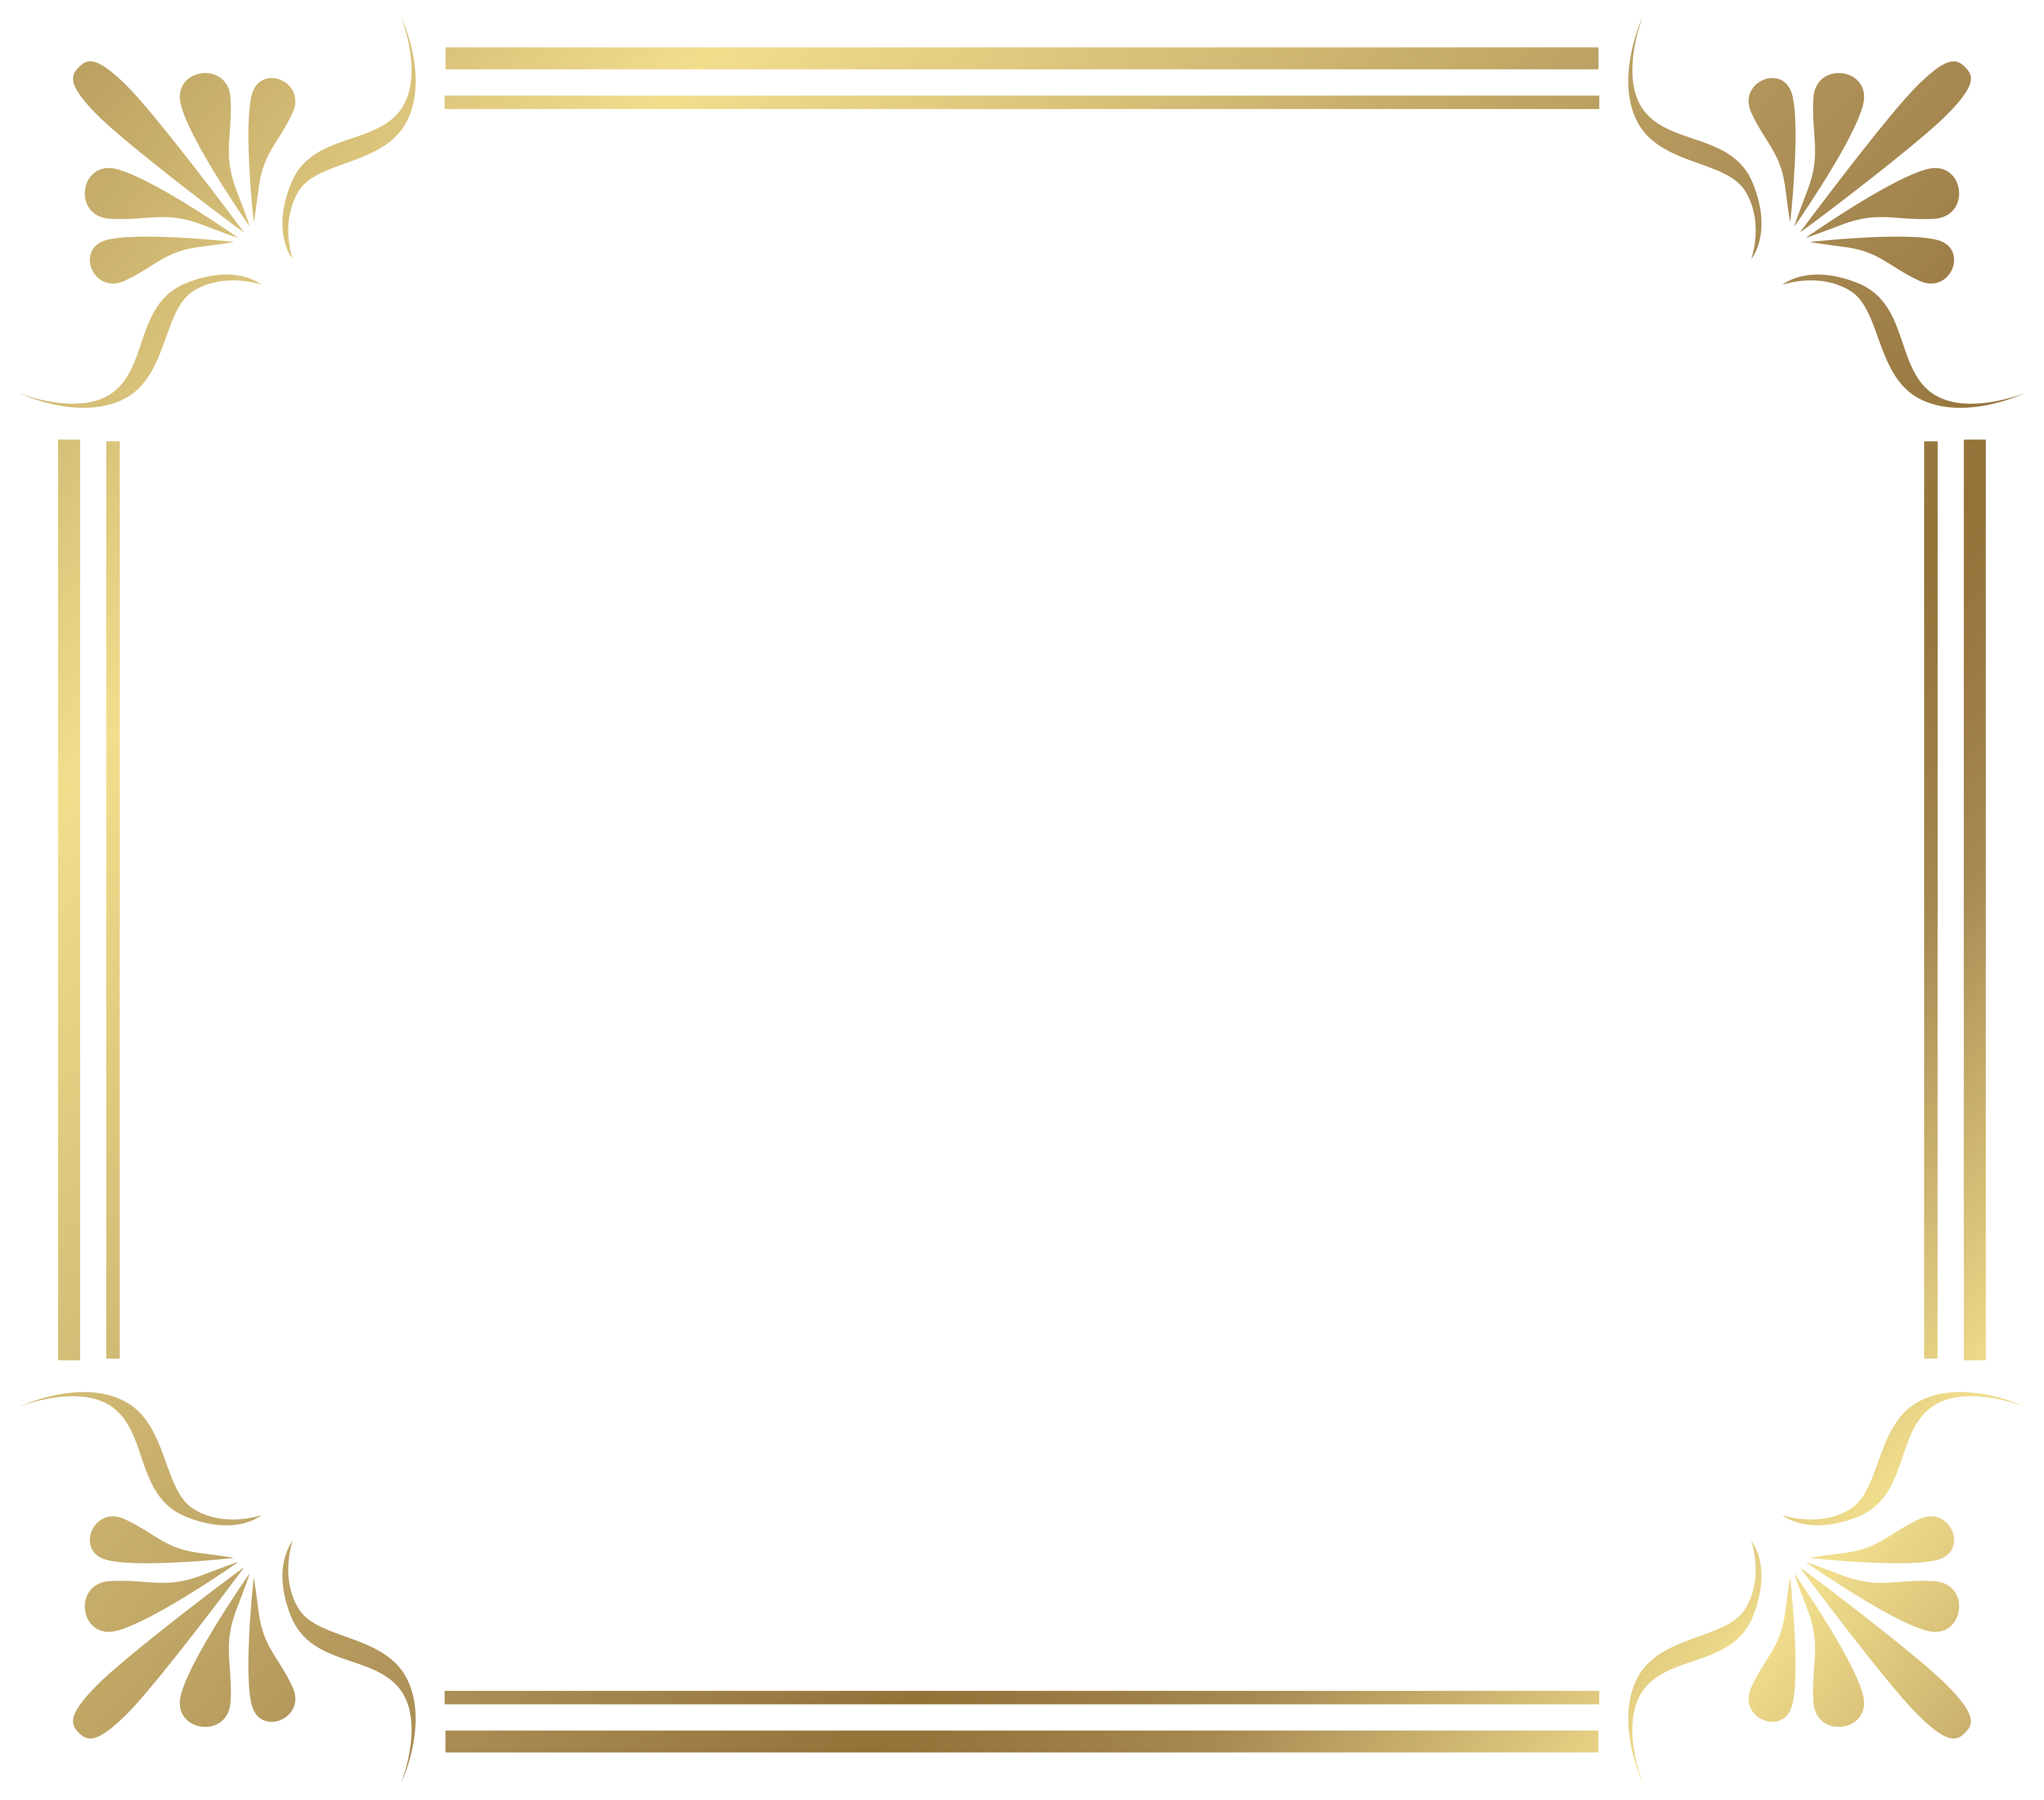 gold picture frame border